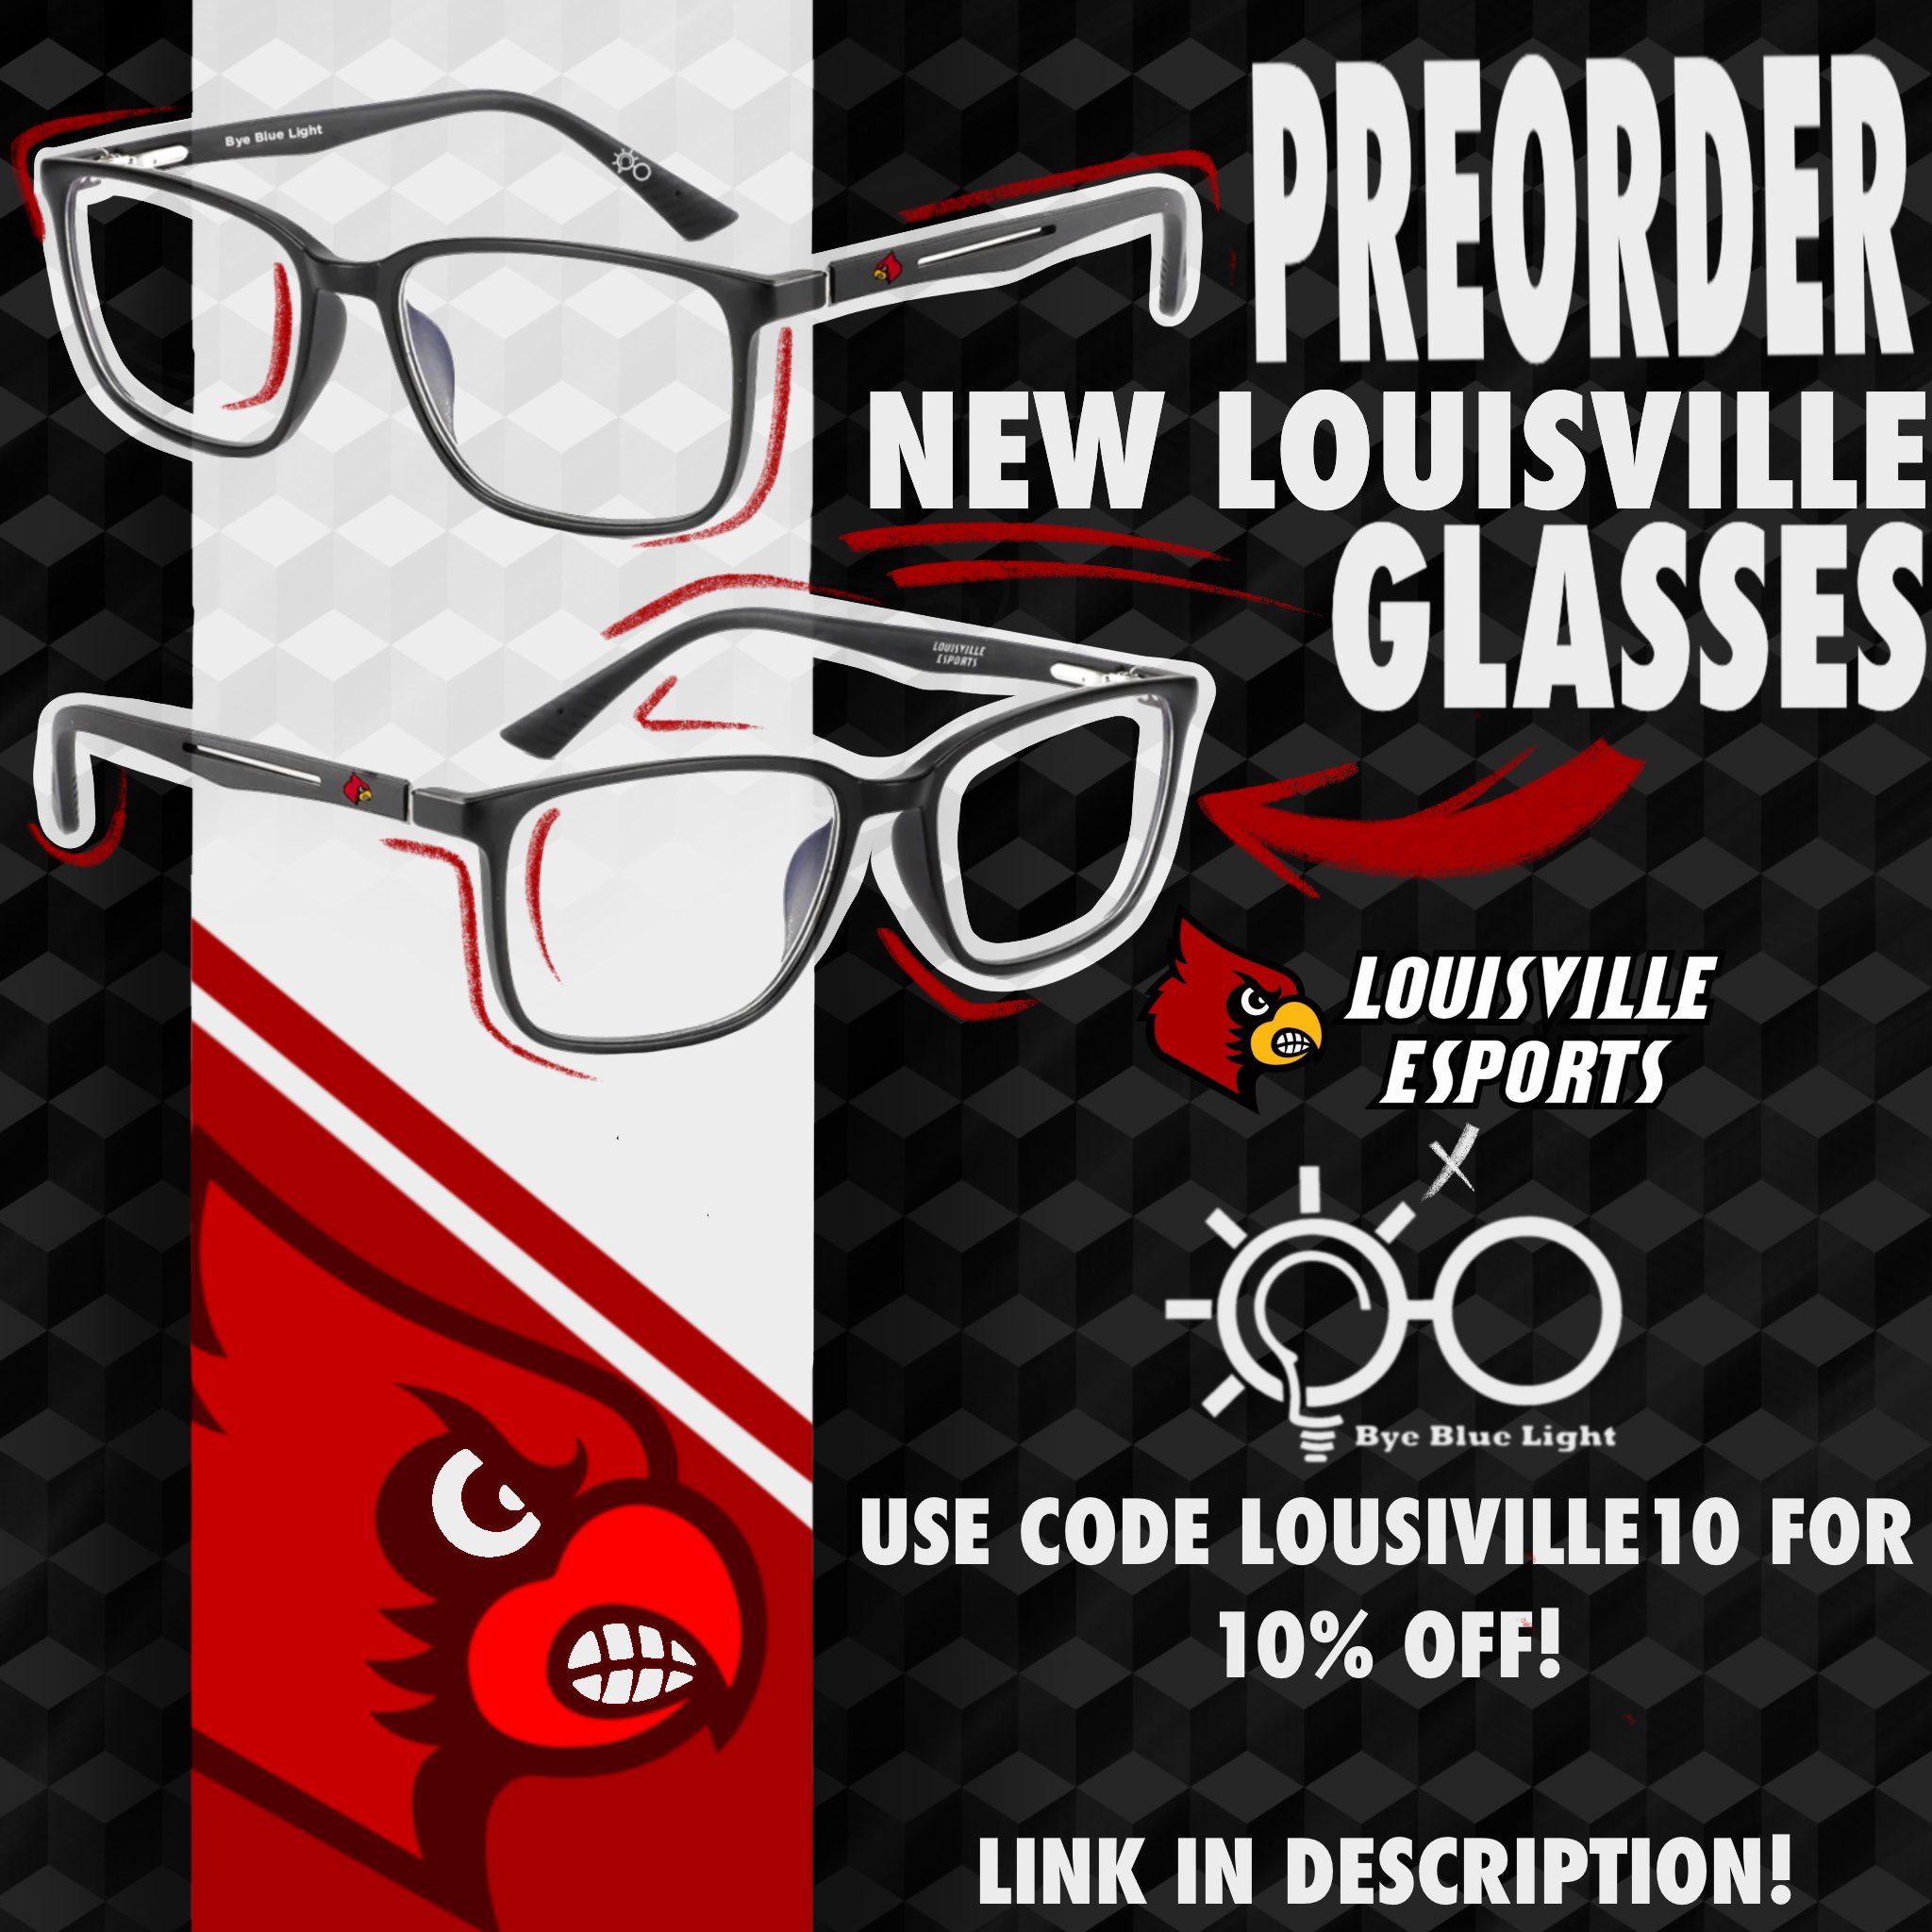 louisville glasses